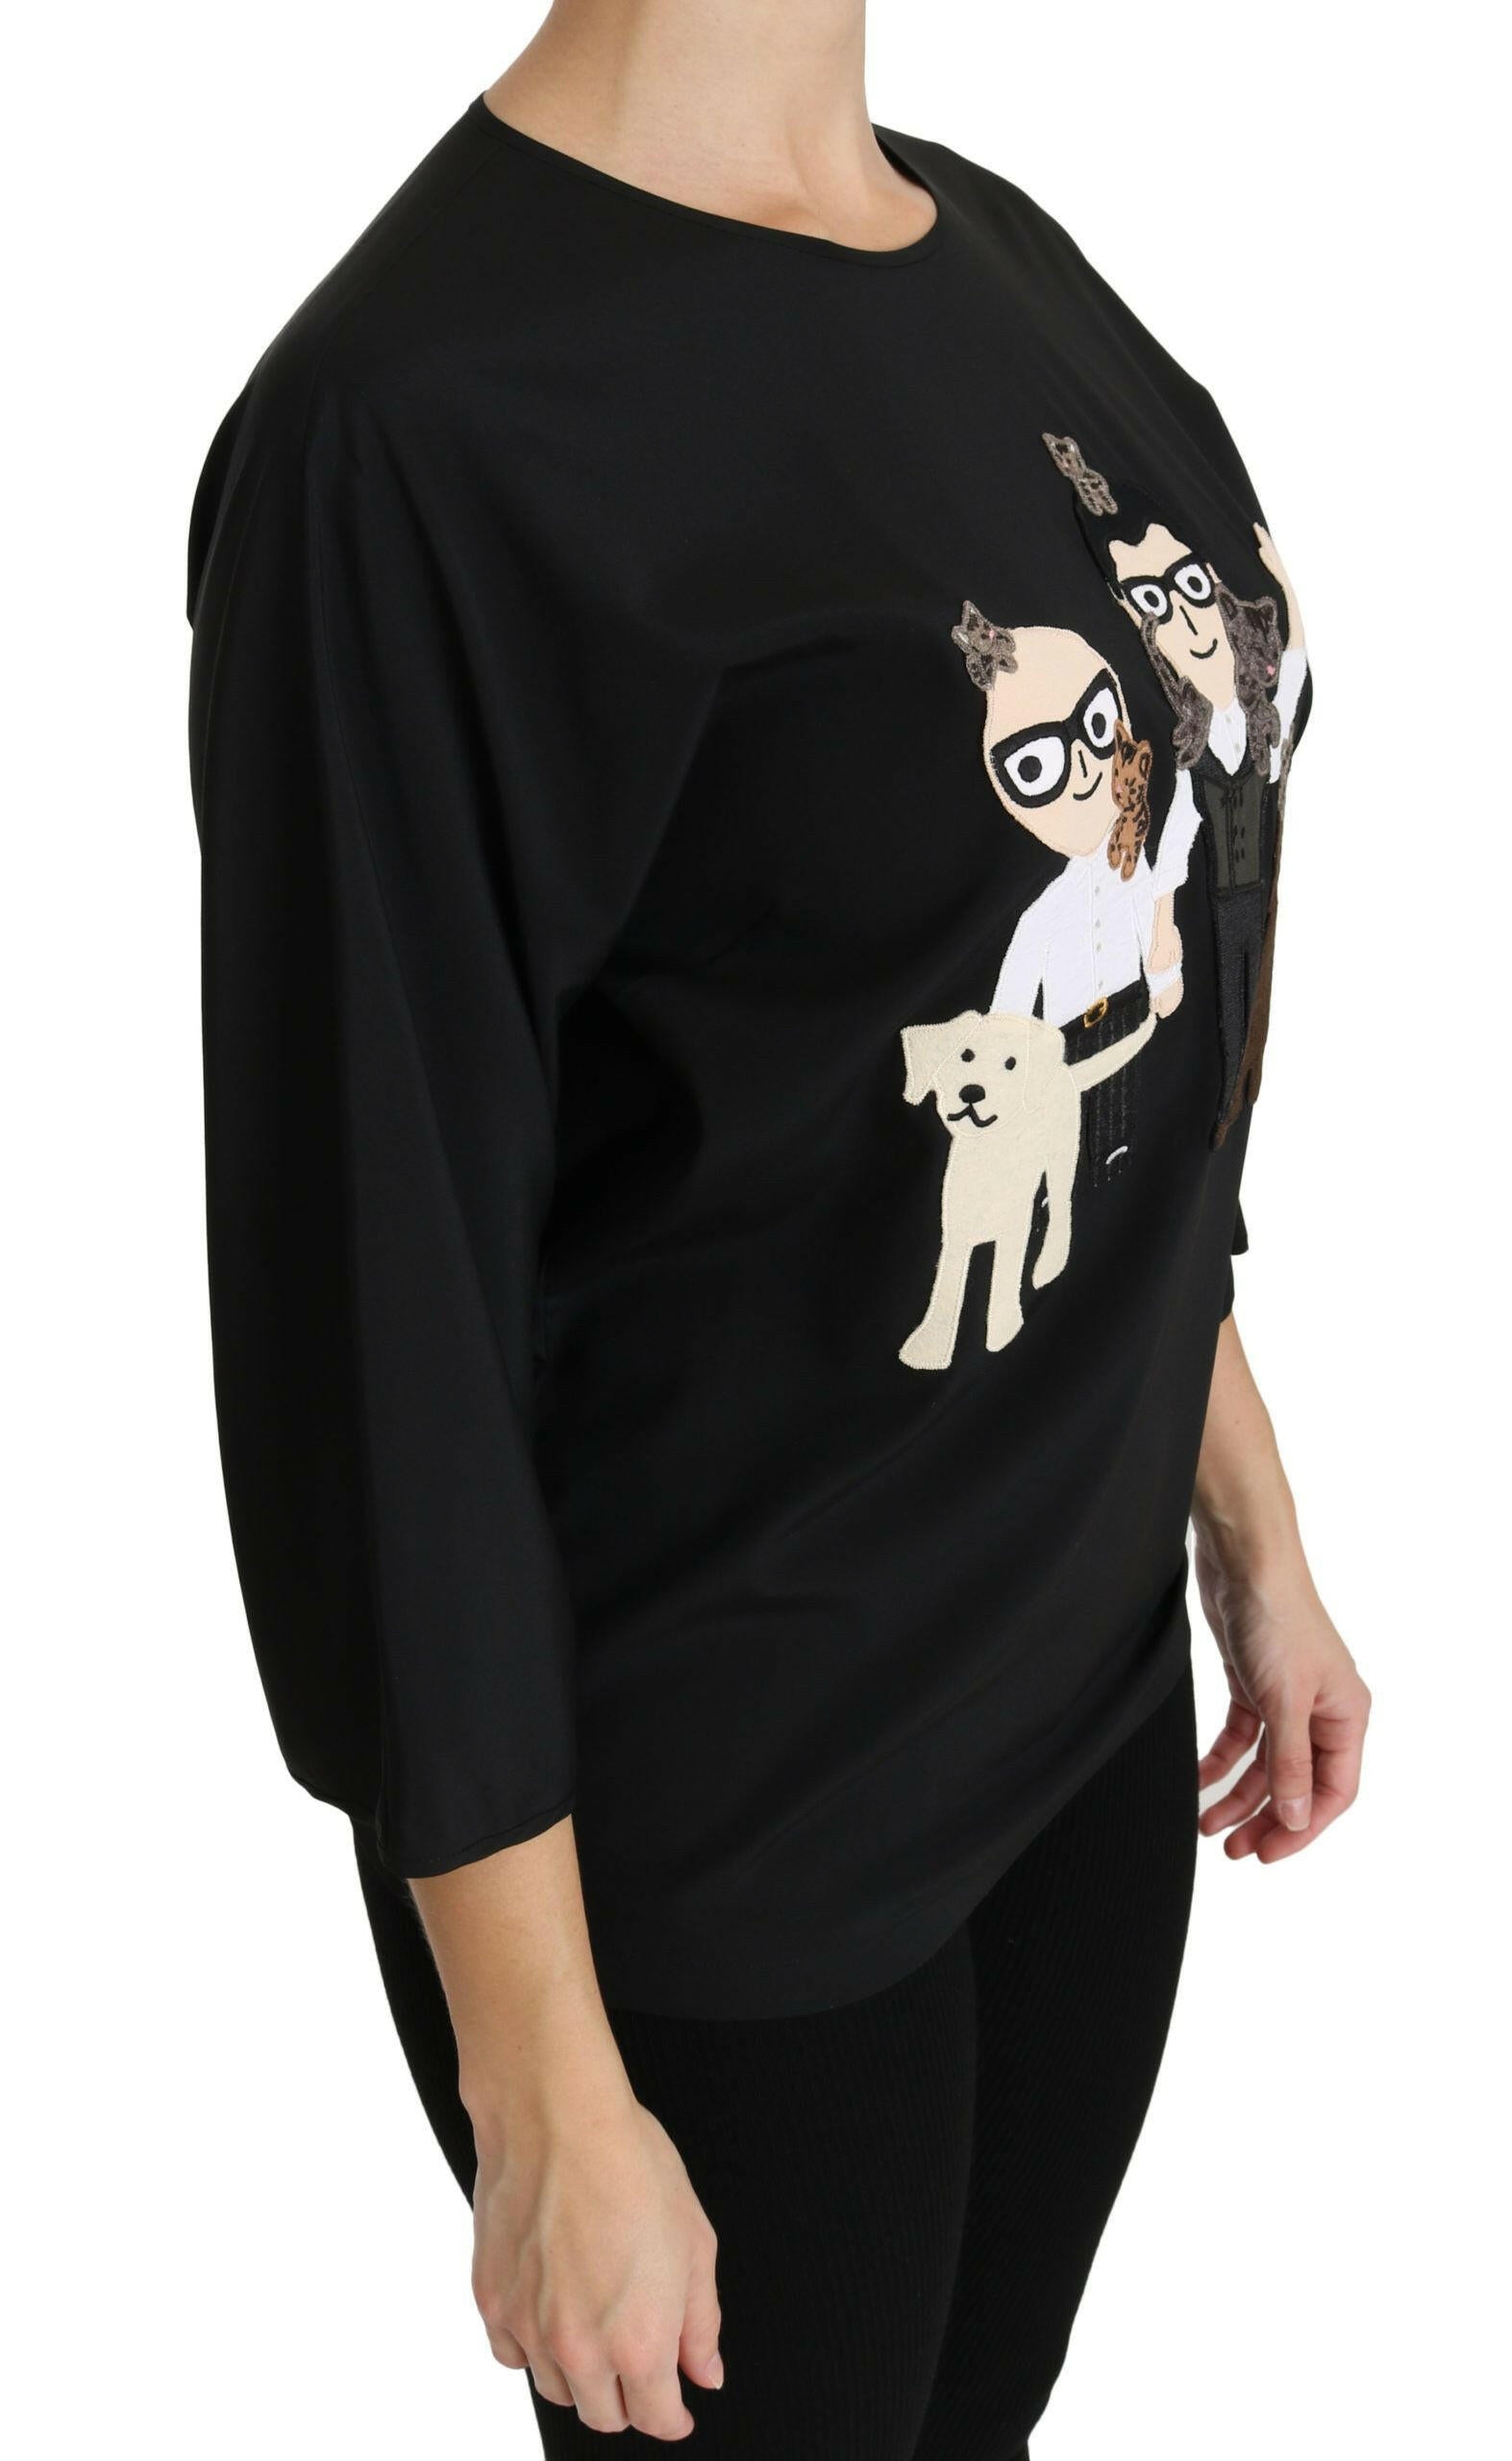 Dolce & Gabbana Black #dgfamily Top T-shirt Silk Blouse - GENUINE AUTHENTIC BRAND LLC  